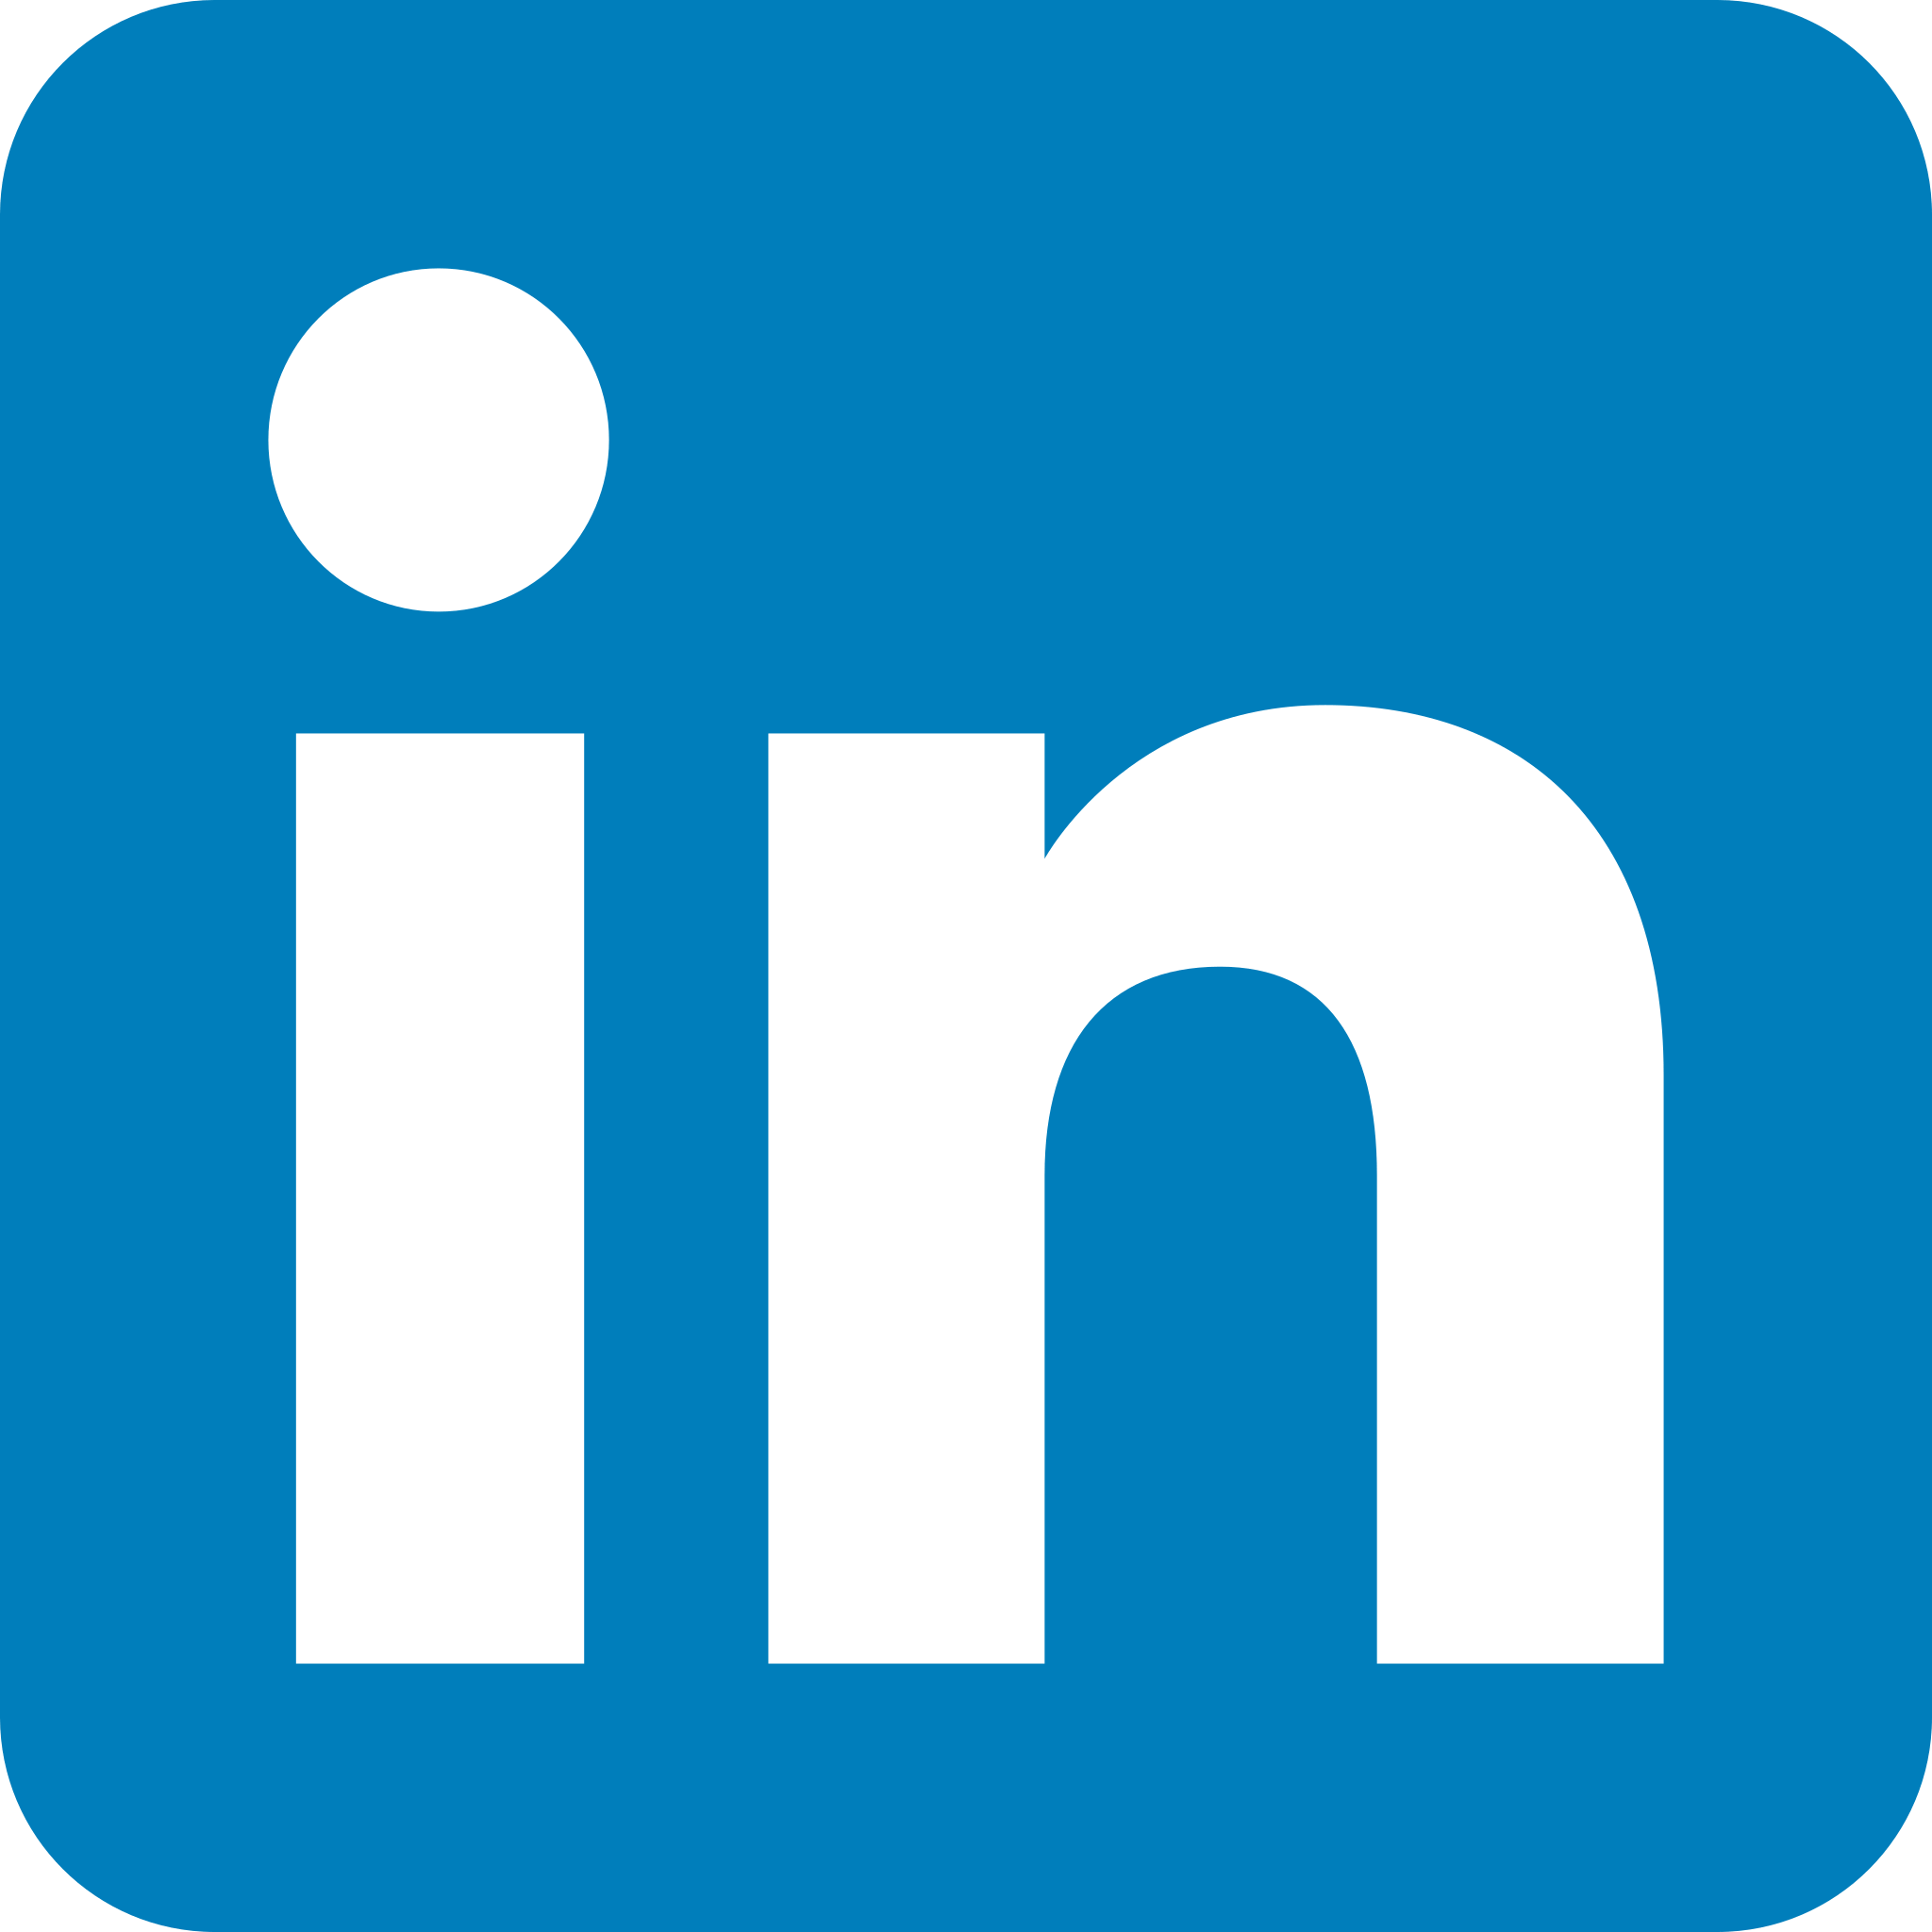 Logo-ul LinkedIn